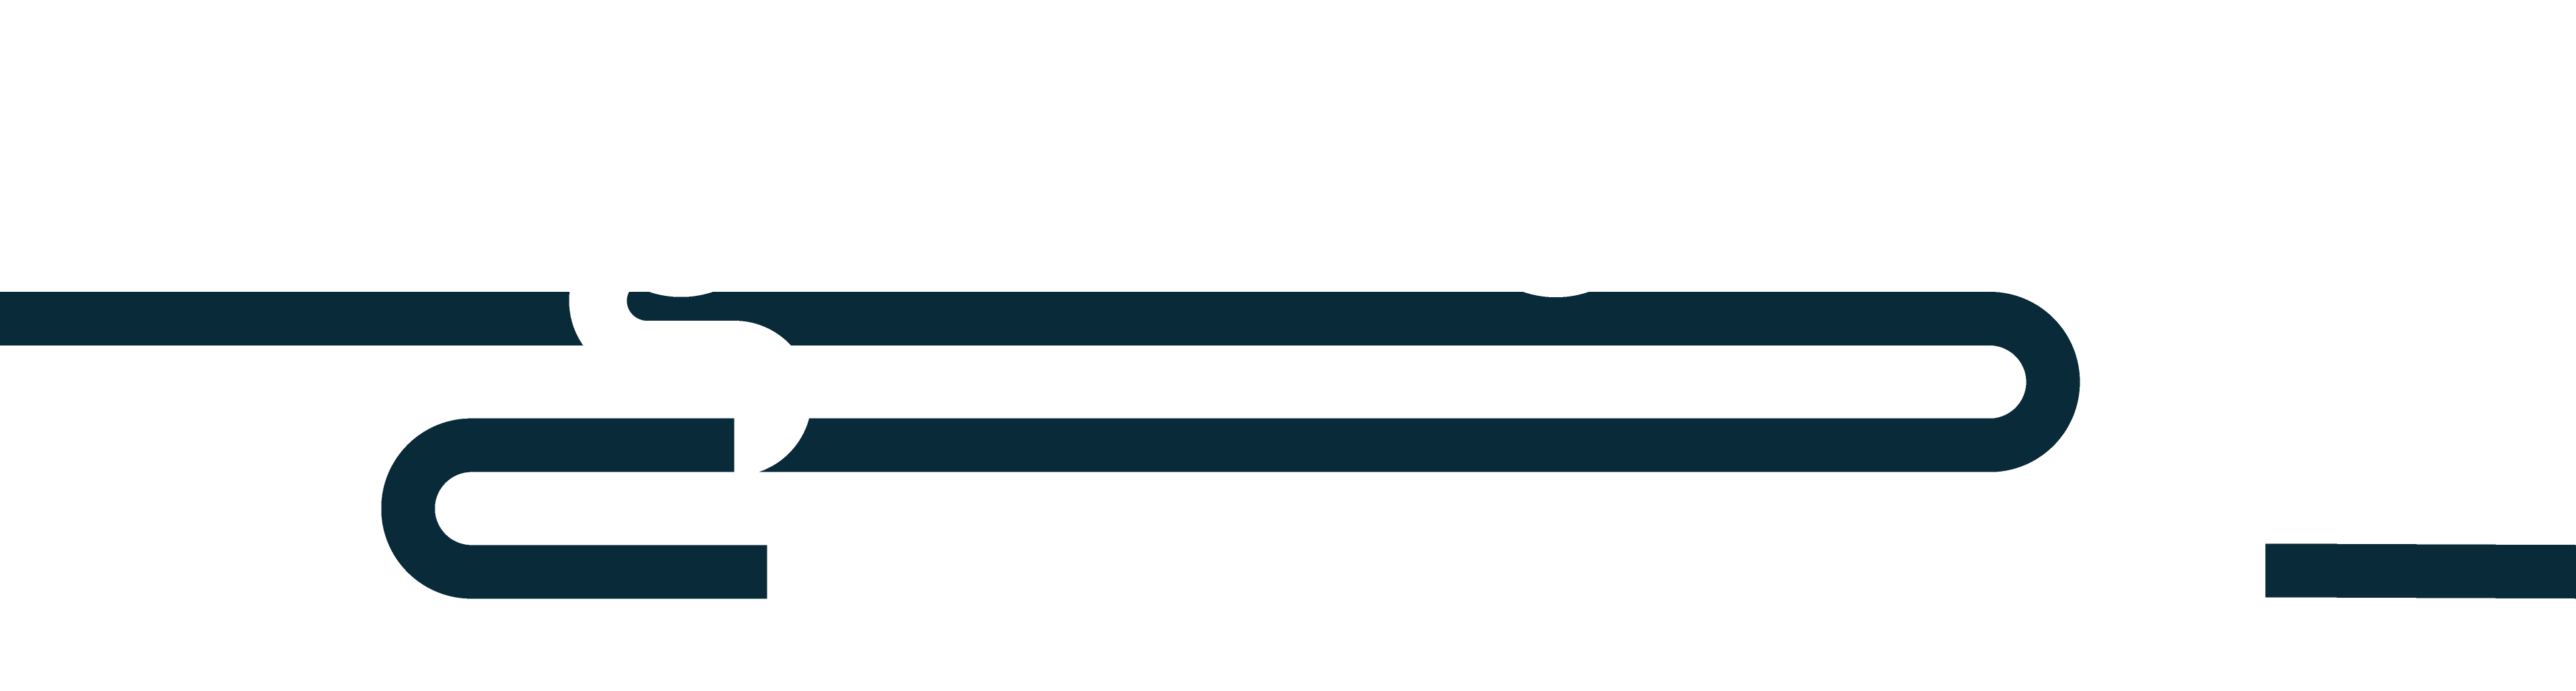 Gizmoty logo